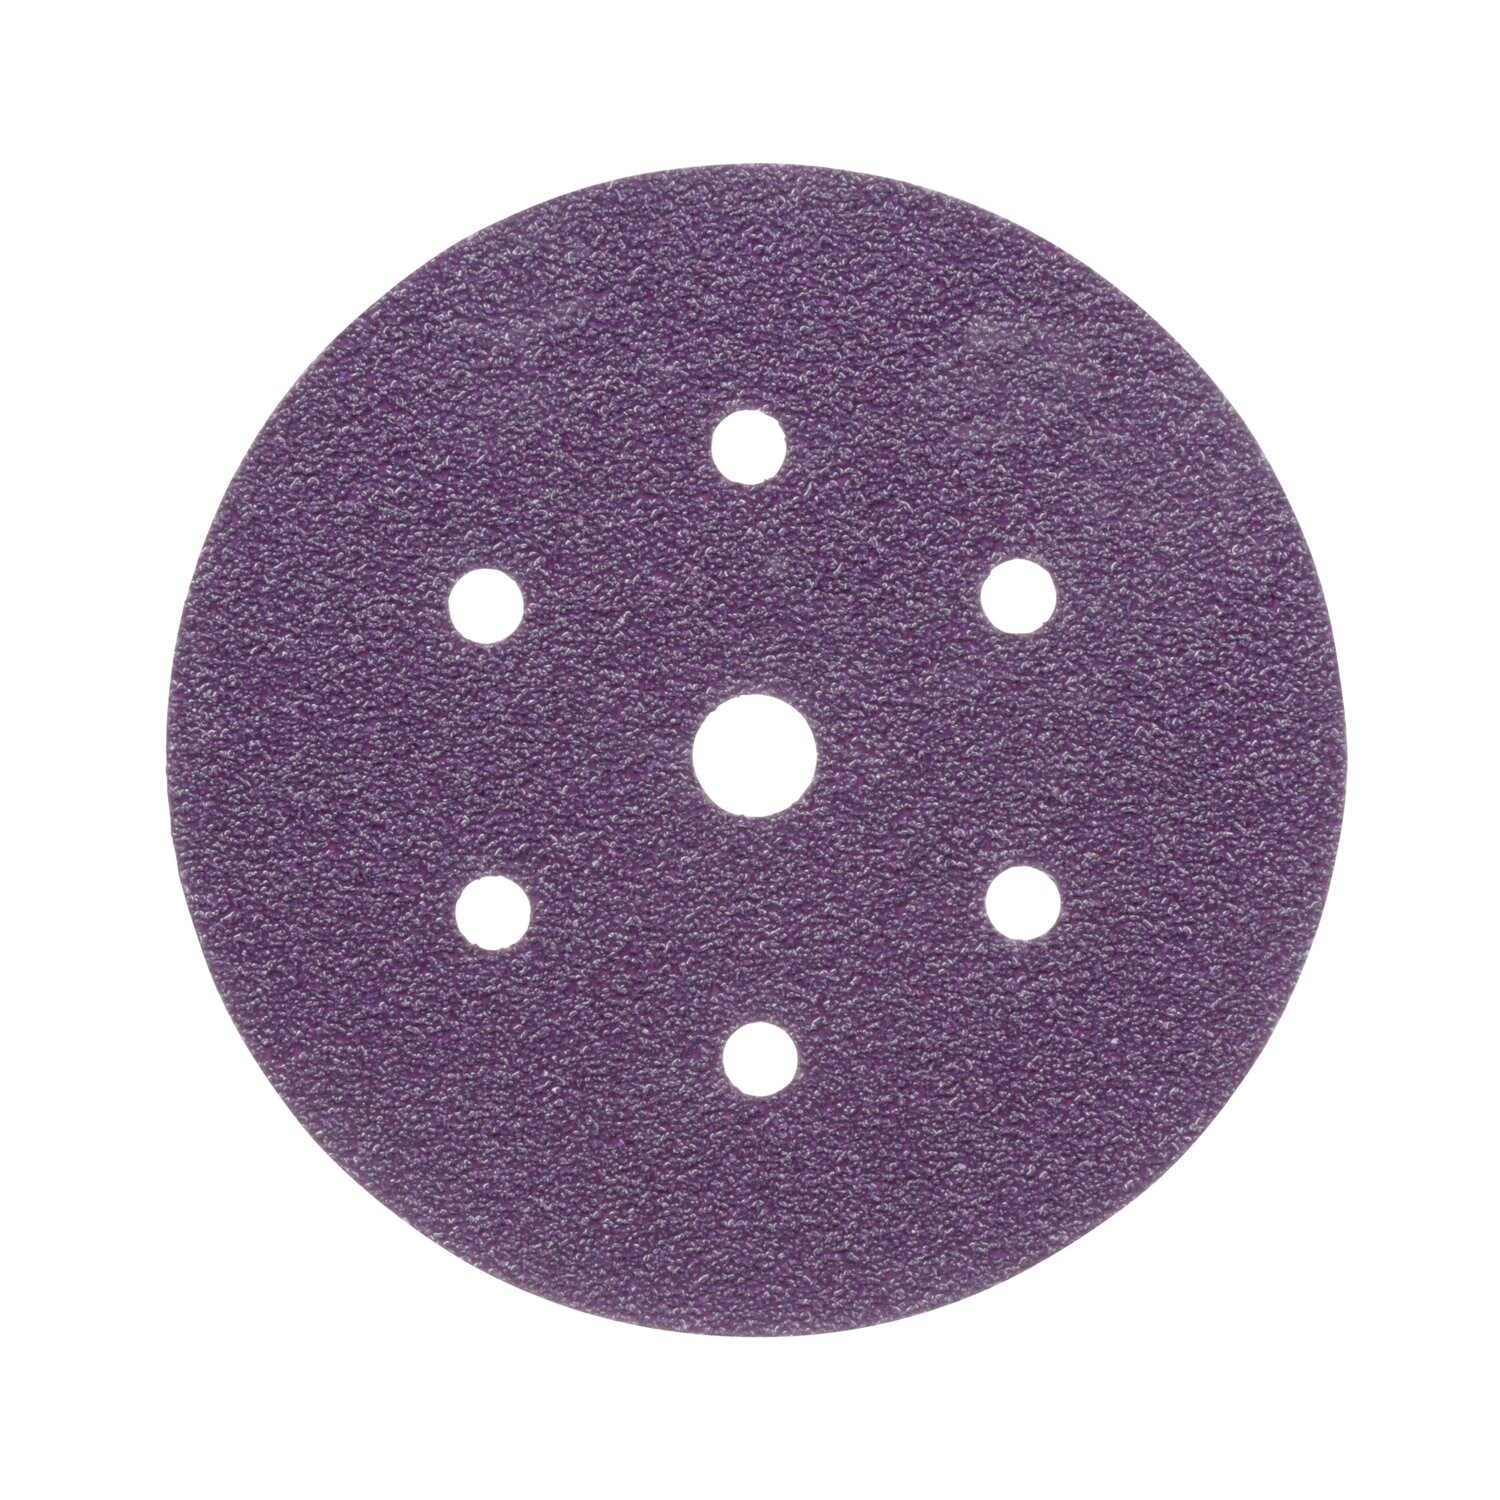 7100073549 - 3M Cubitron II Hookit Clean Sanding Abrasive Disc, 31370, 6 in, 40+
grade, 25 discs per carton, 4 cartons per case